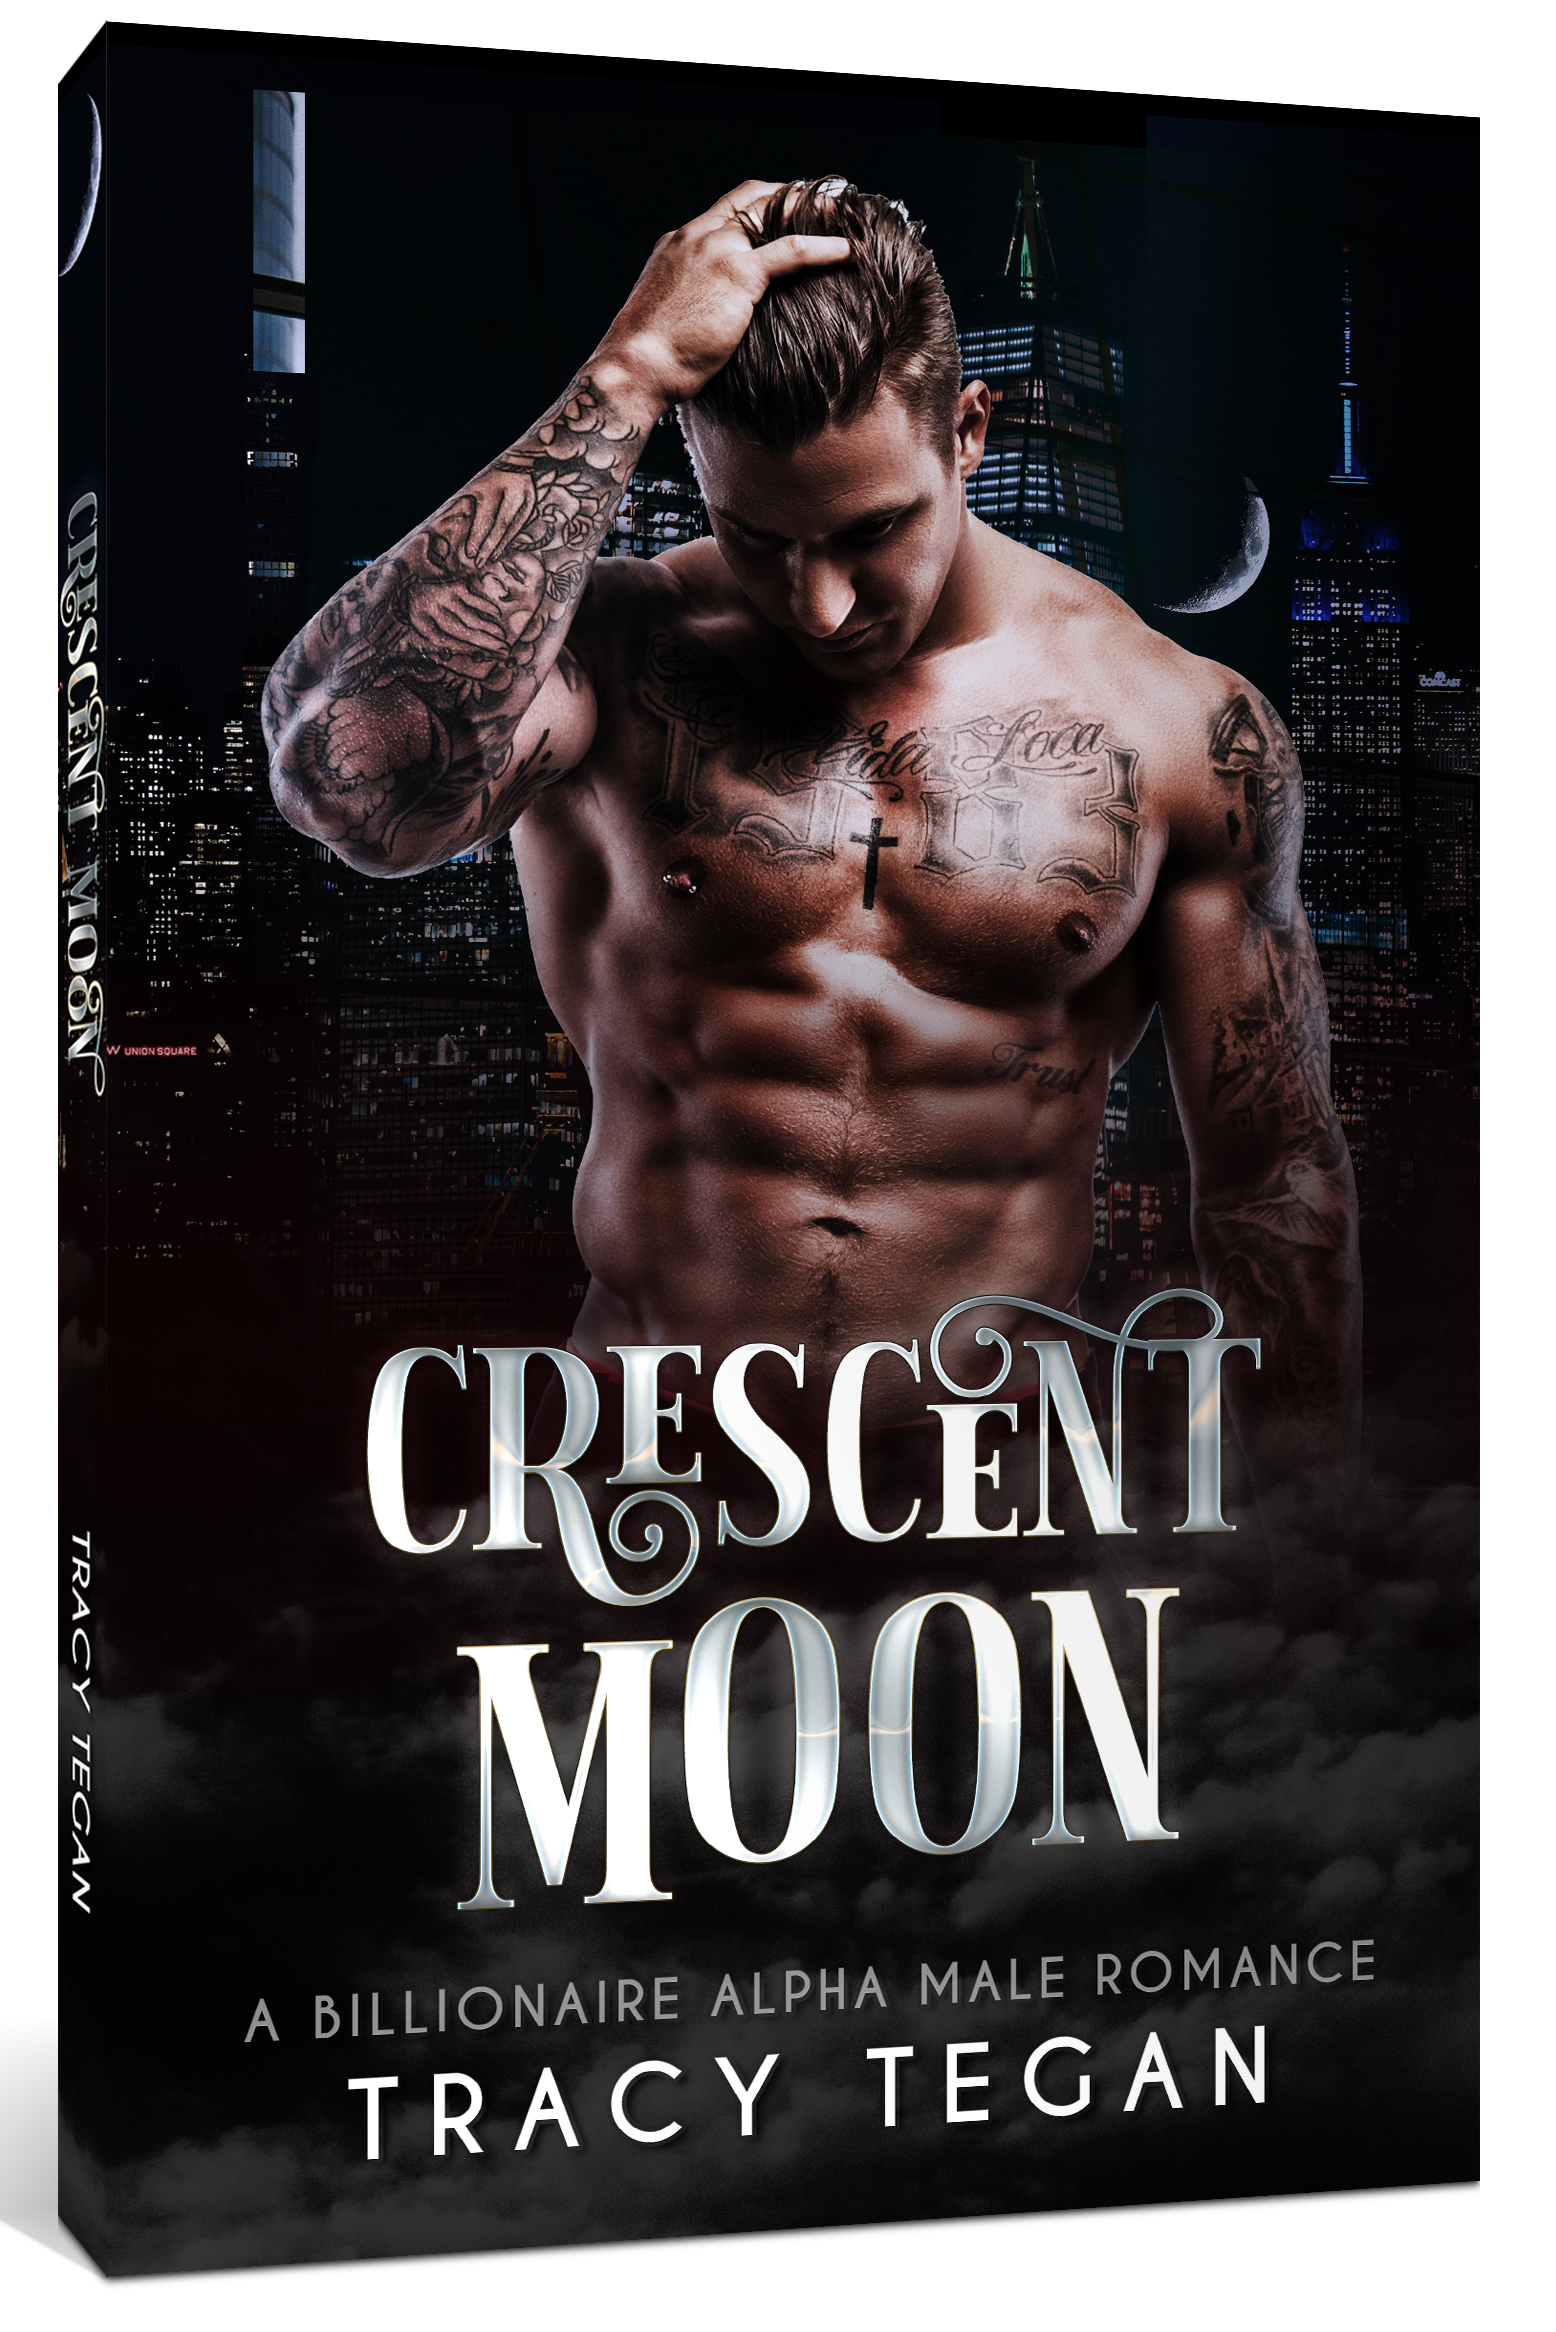 Crescent Moon - Tracy Tegan - romance novel